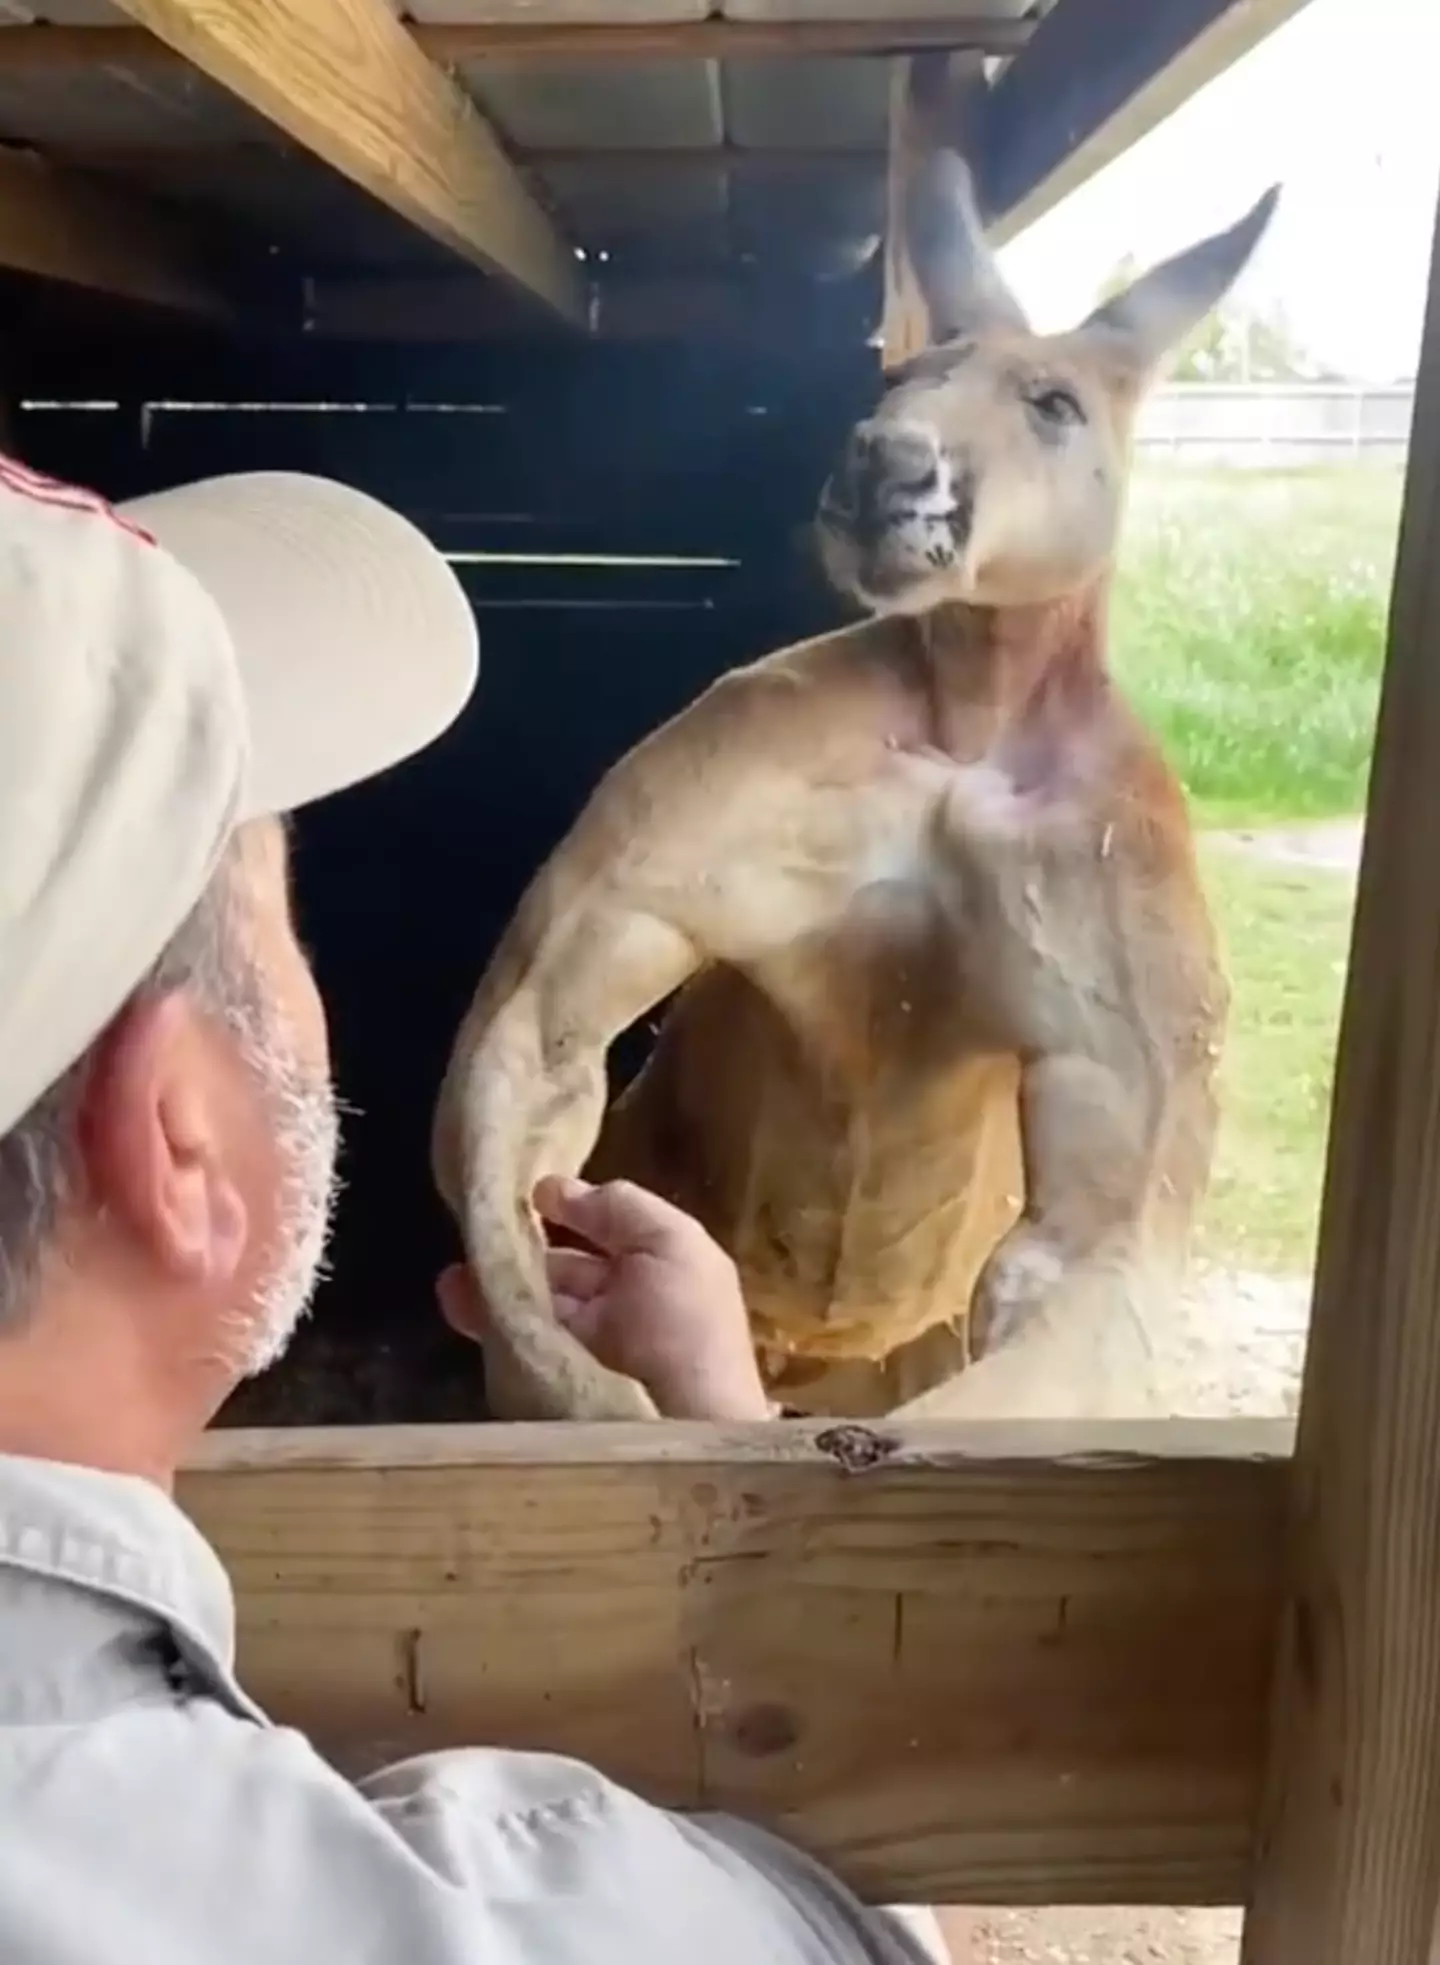 This kangaroo definitely didn't skip arm day.